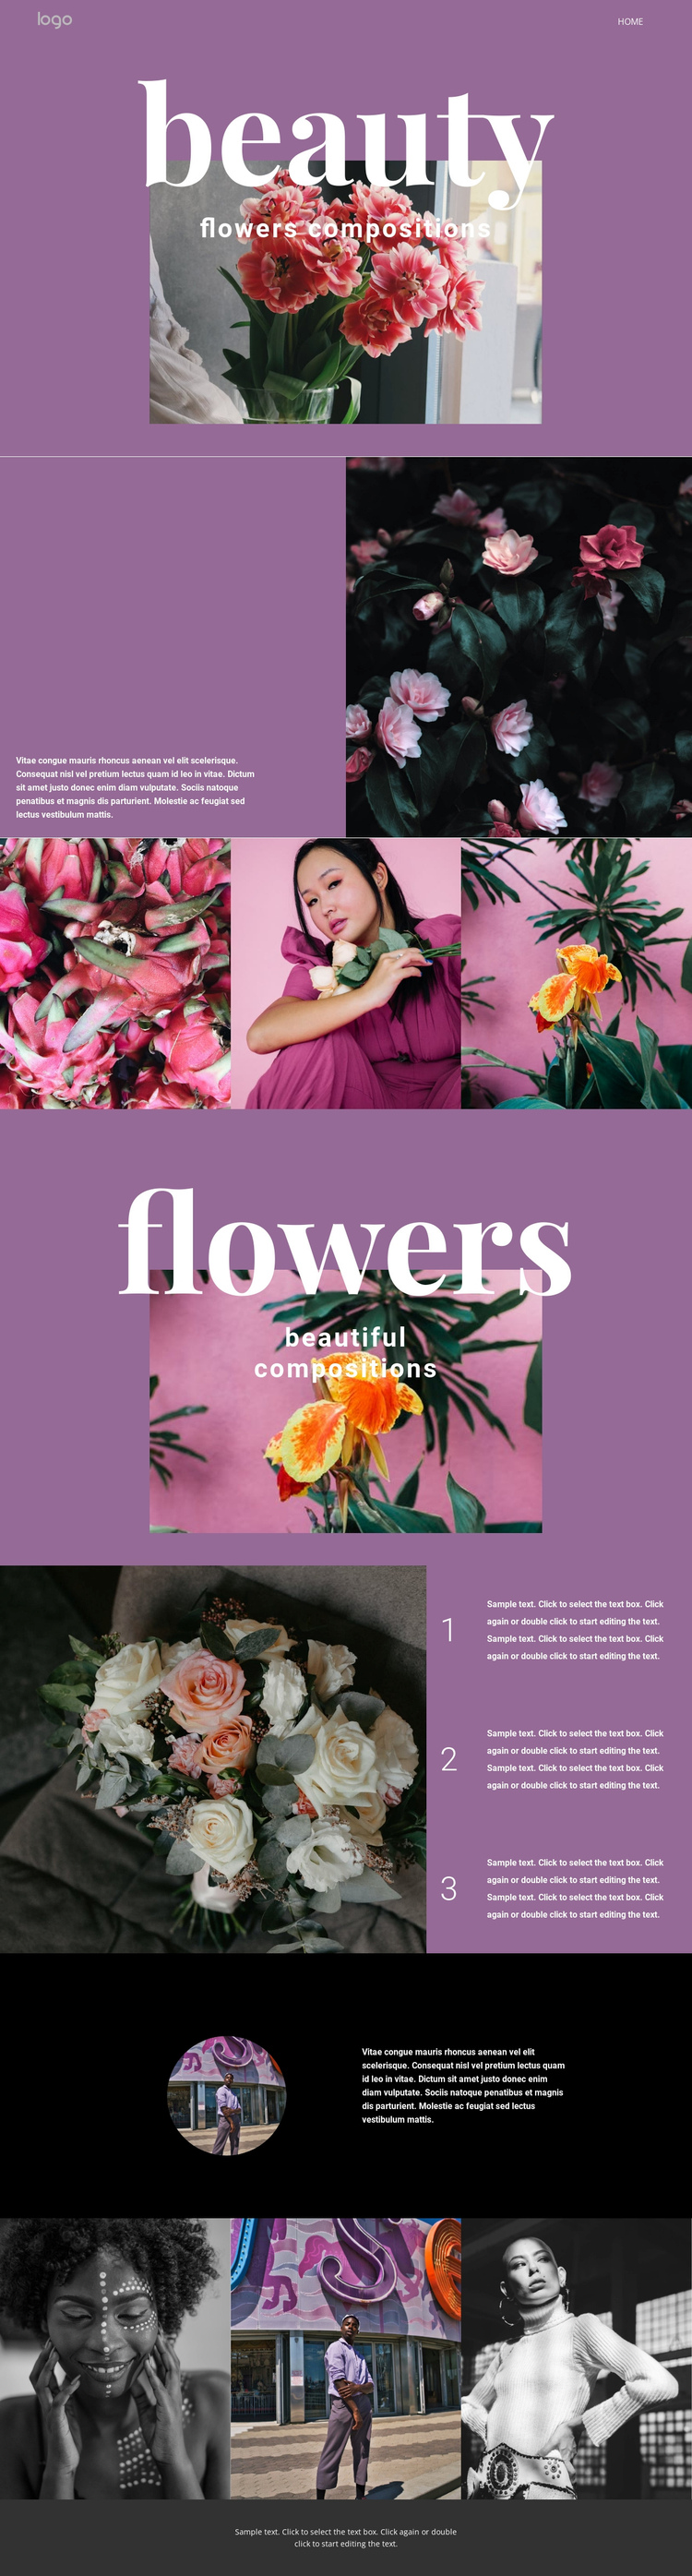 Flower salon Website Builder Software